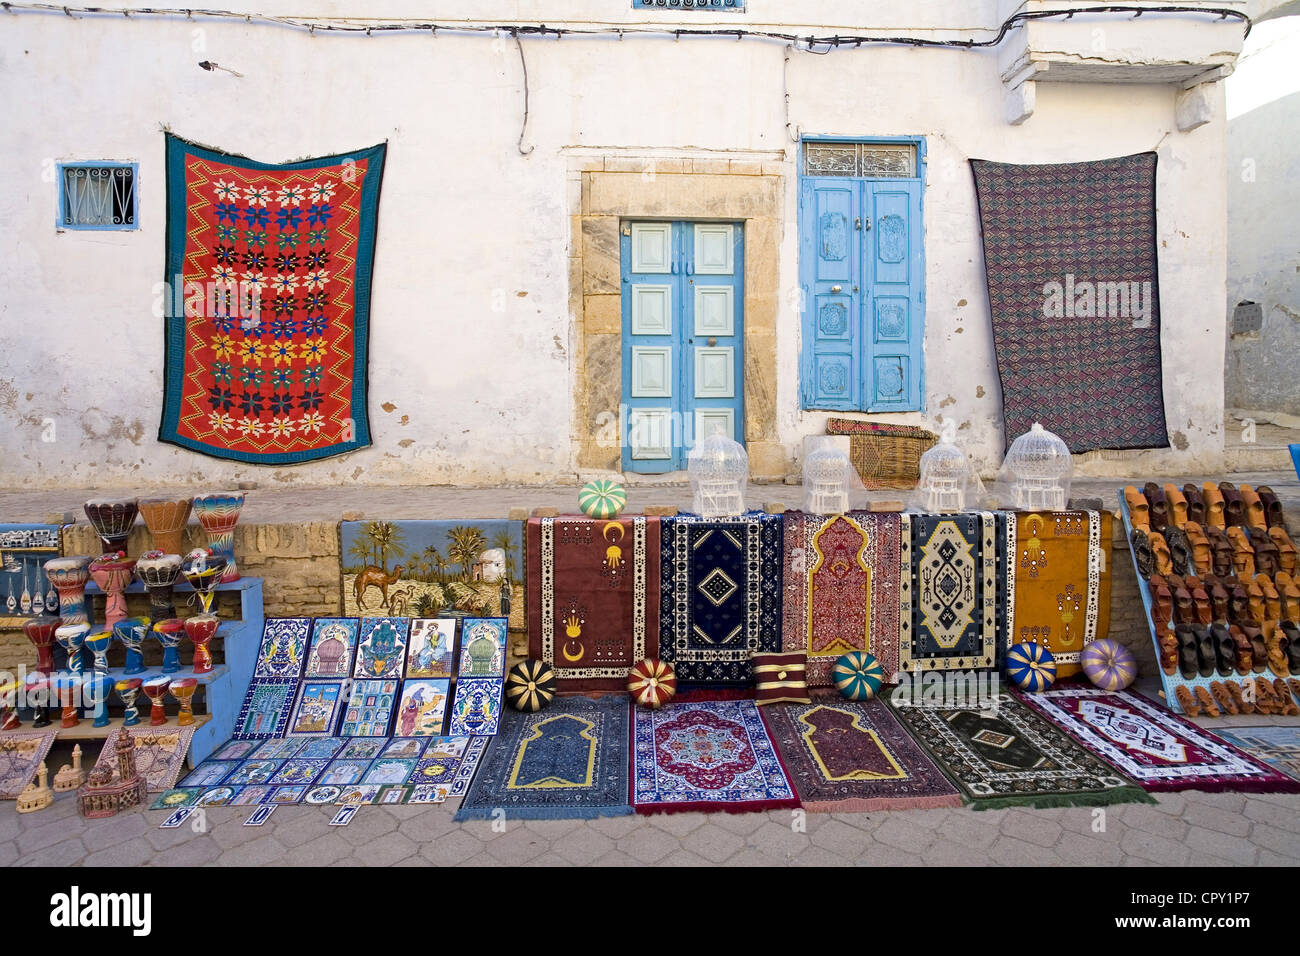 Tunisia Kairouan, produttore di tappeti Foto stock - Alamy